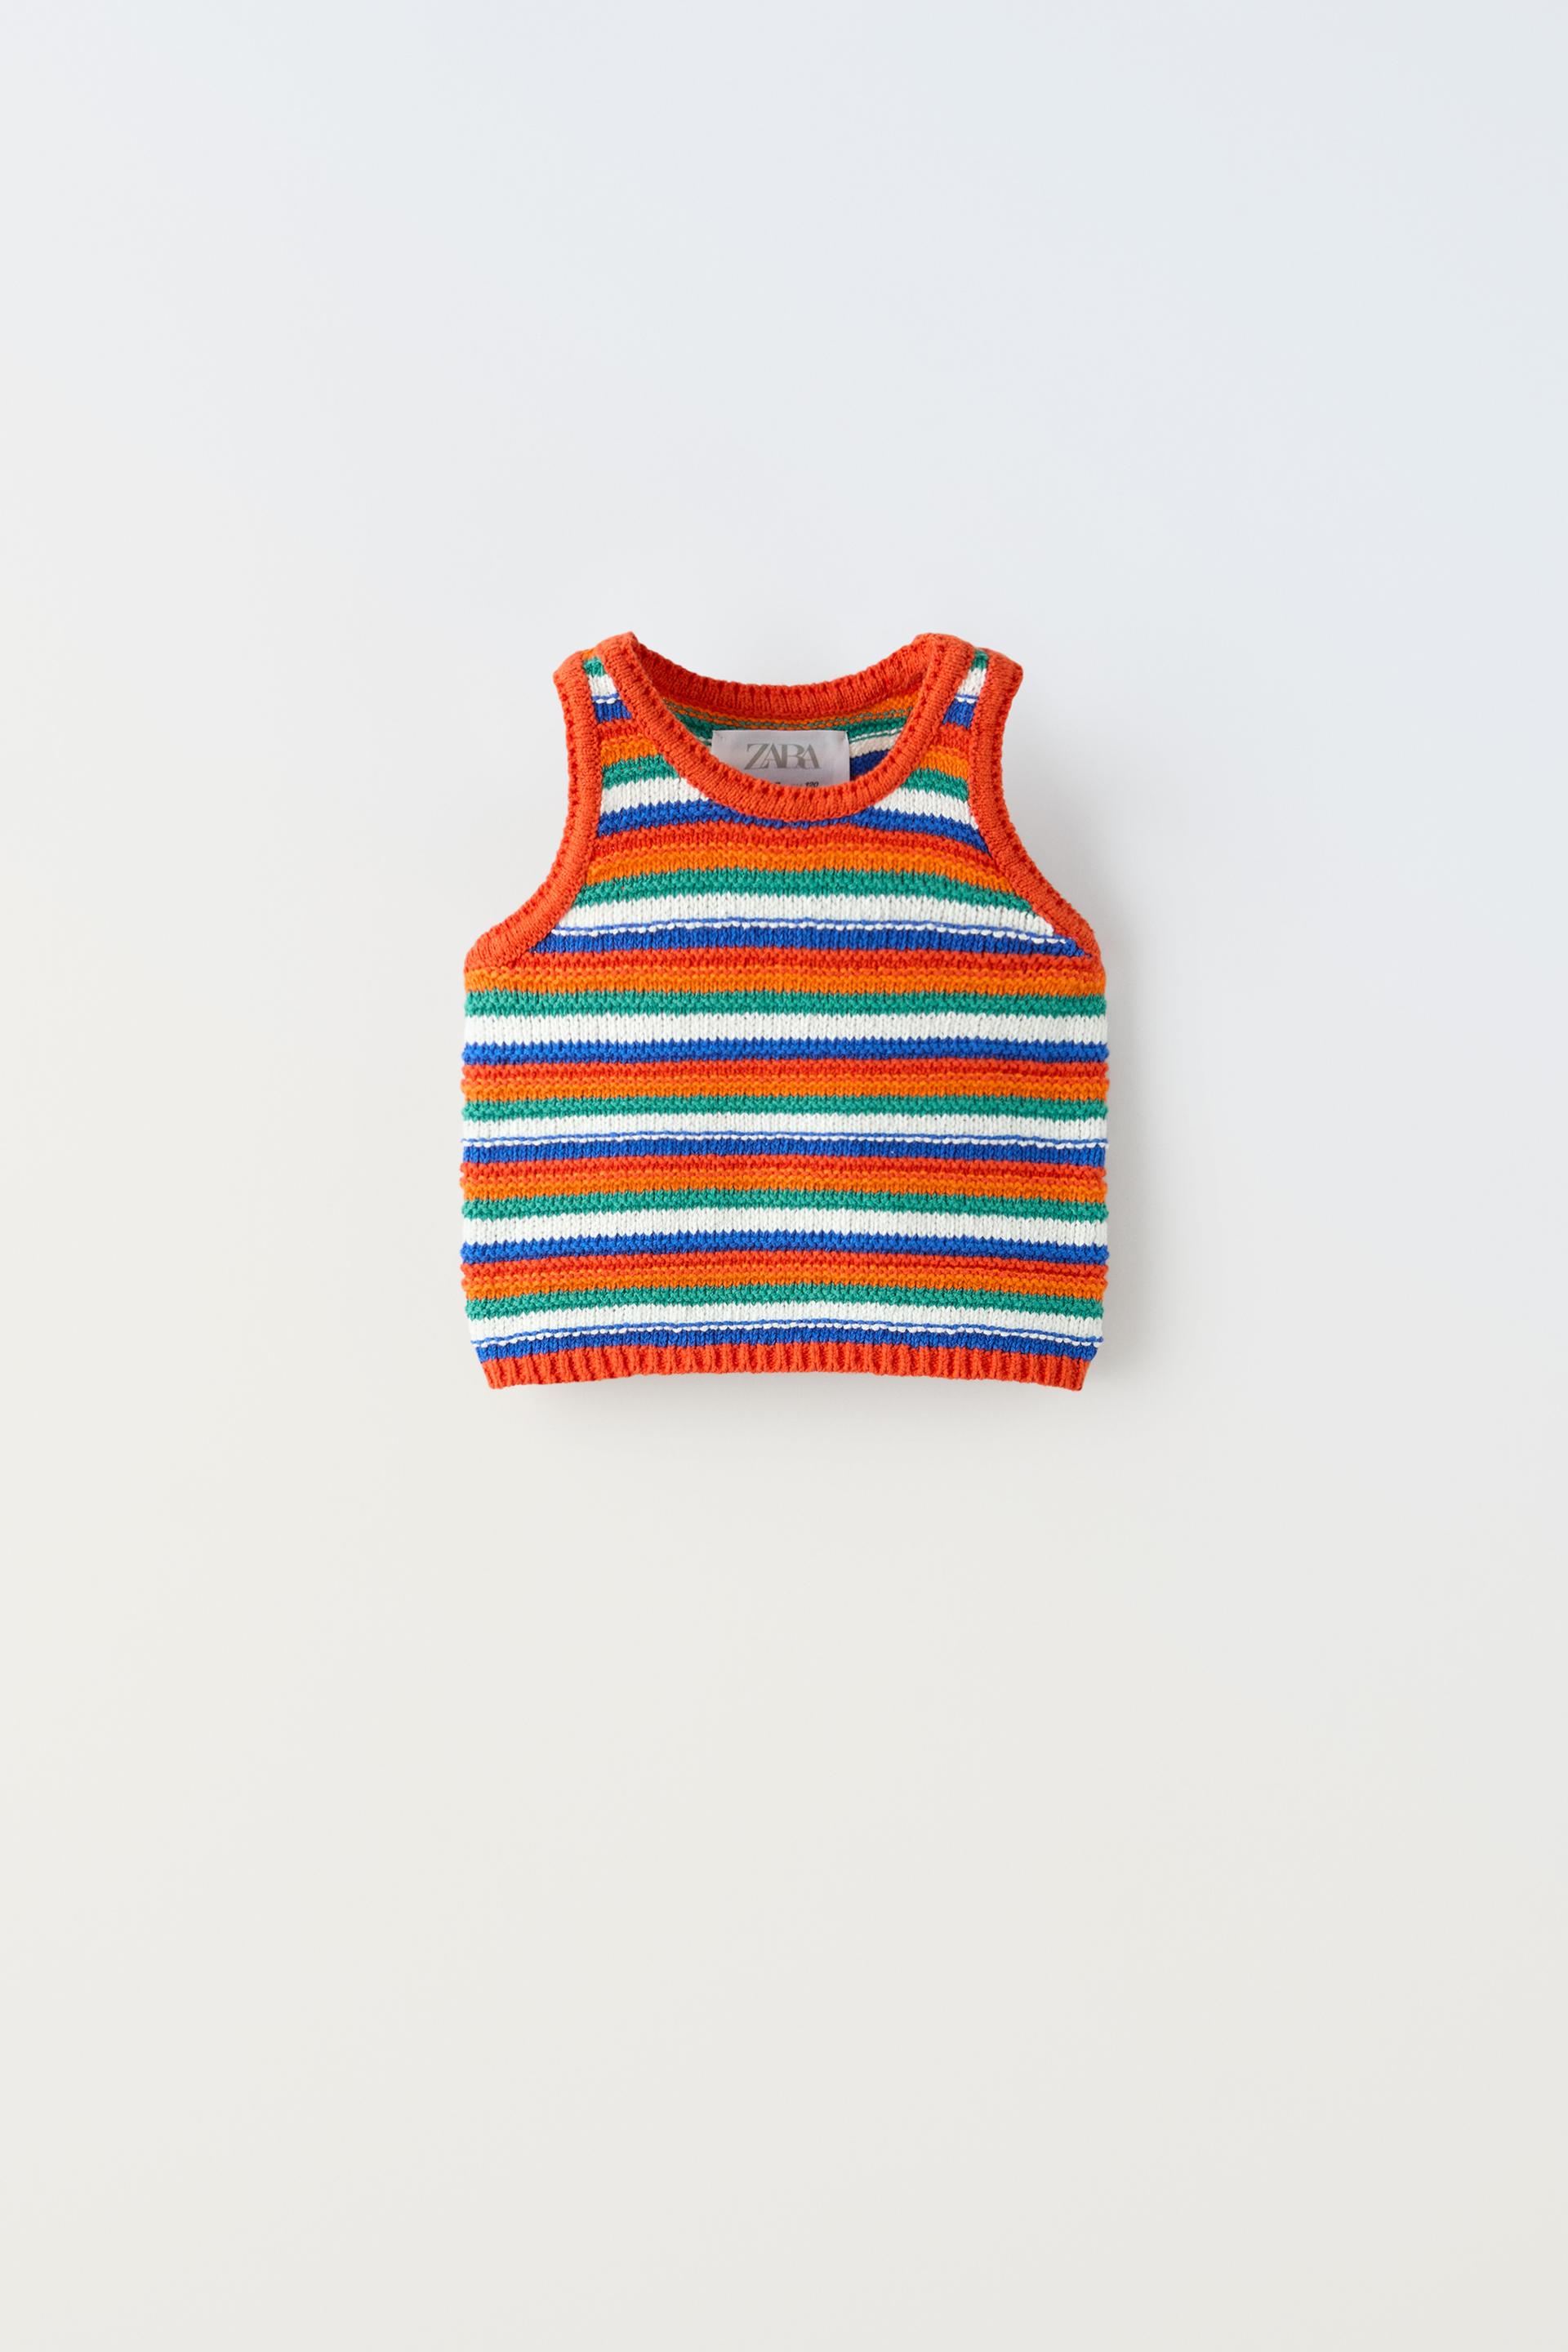 цена Топ Zara Striped Knit, разноцветный